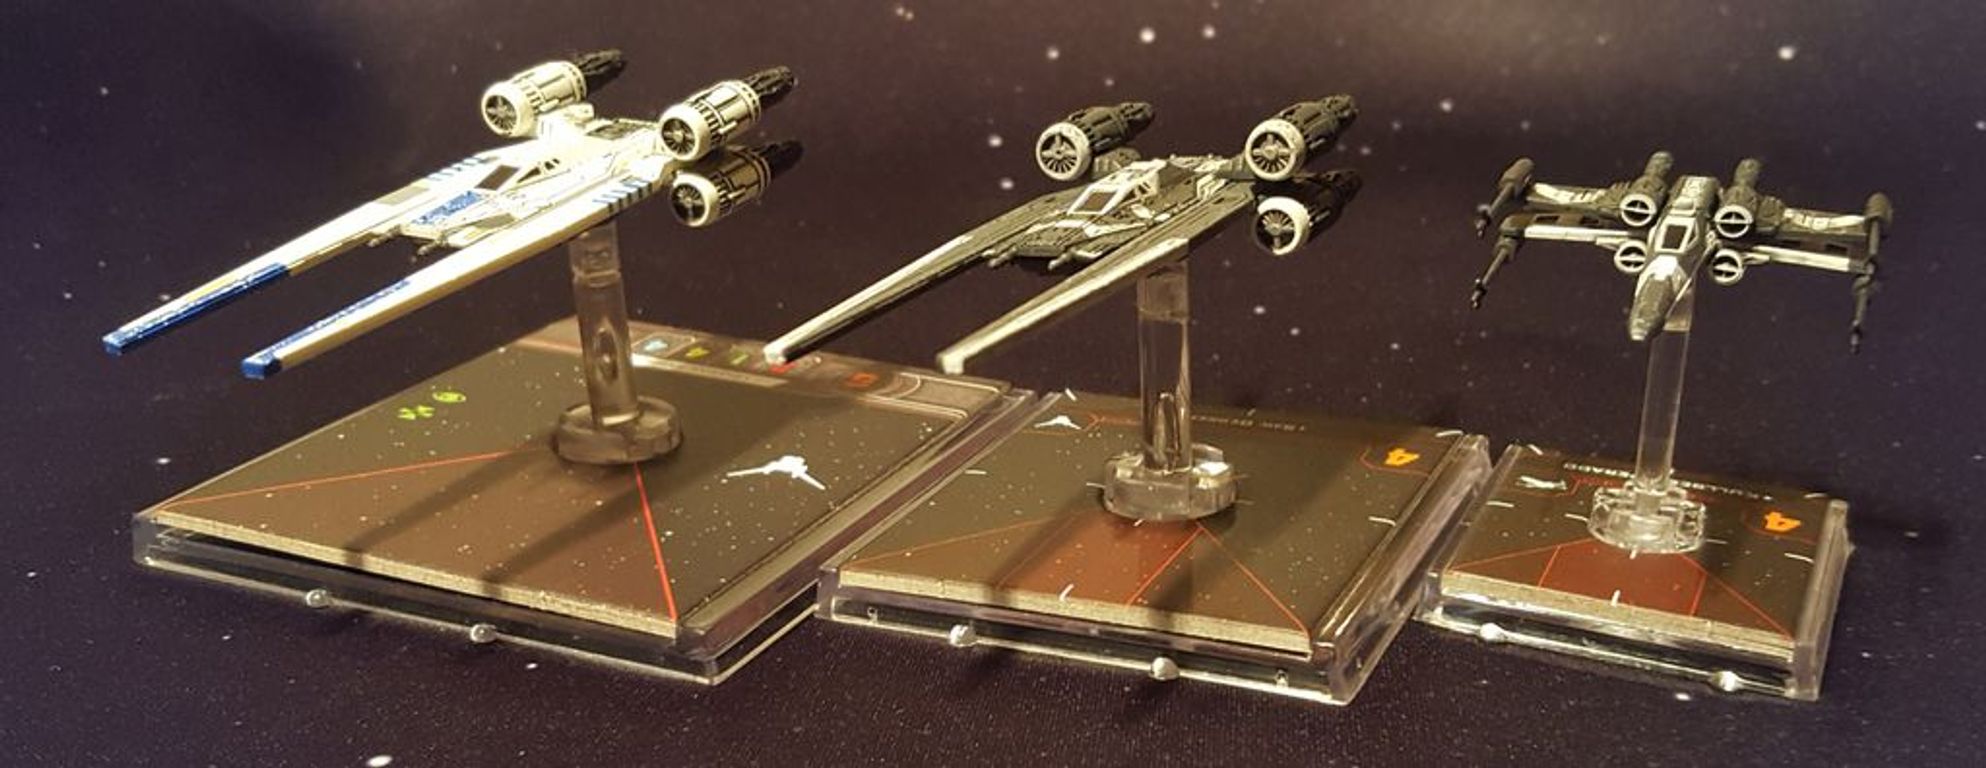 Star Wars: X-Wing Le jeu de figurines – Les Renégats de Saw miniatures